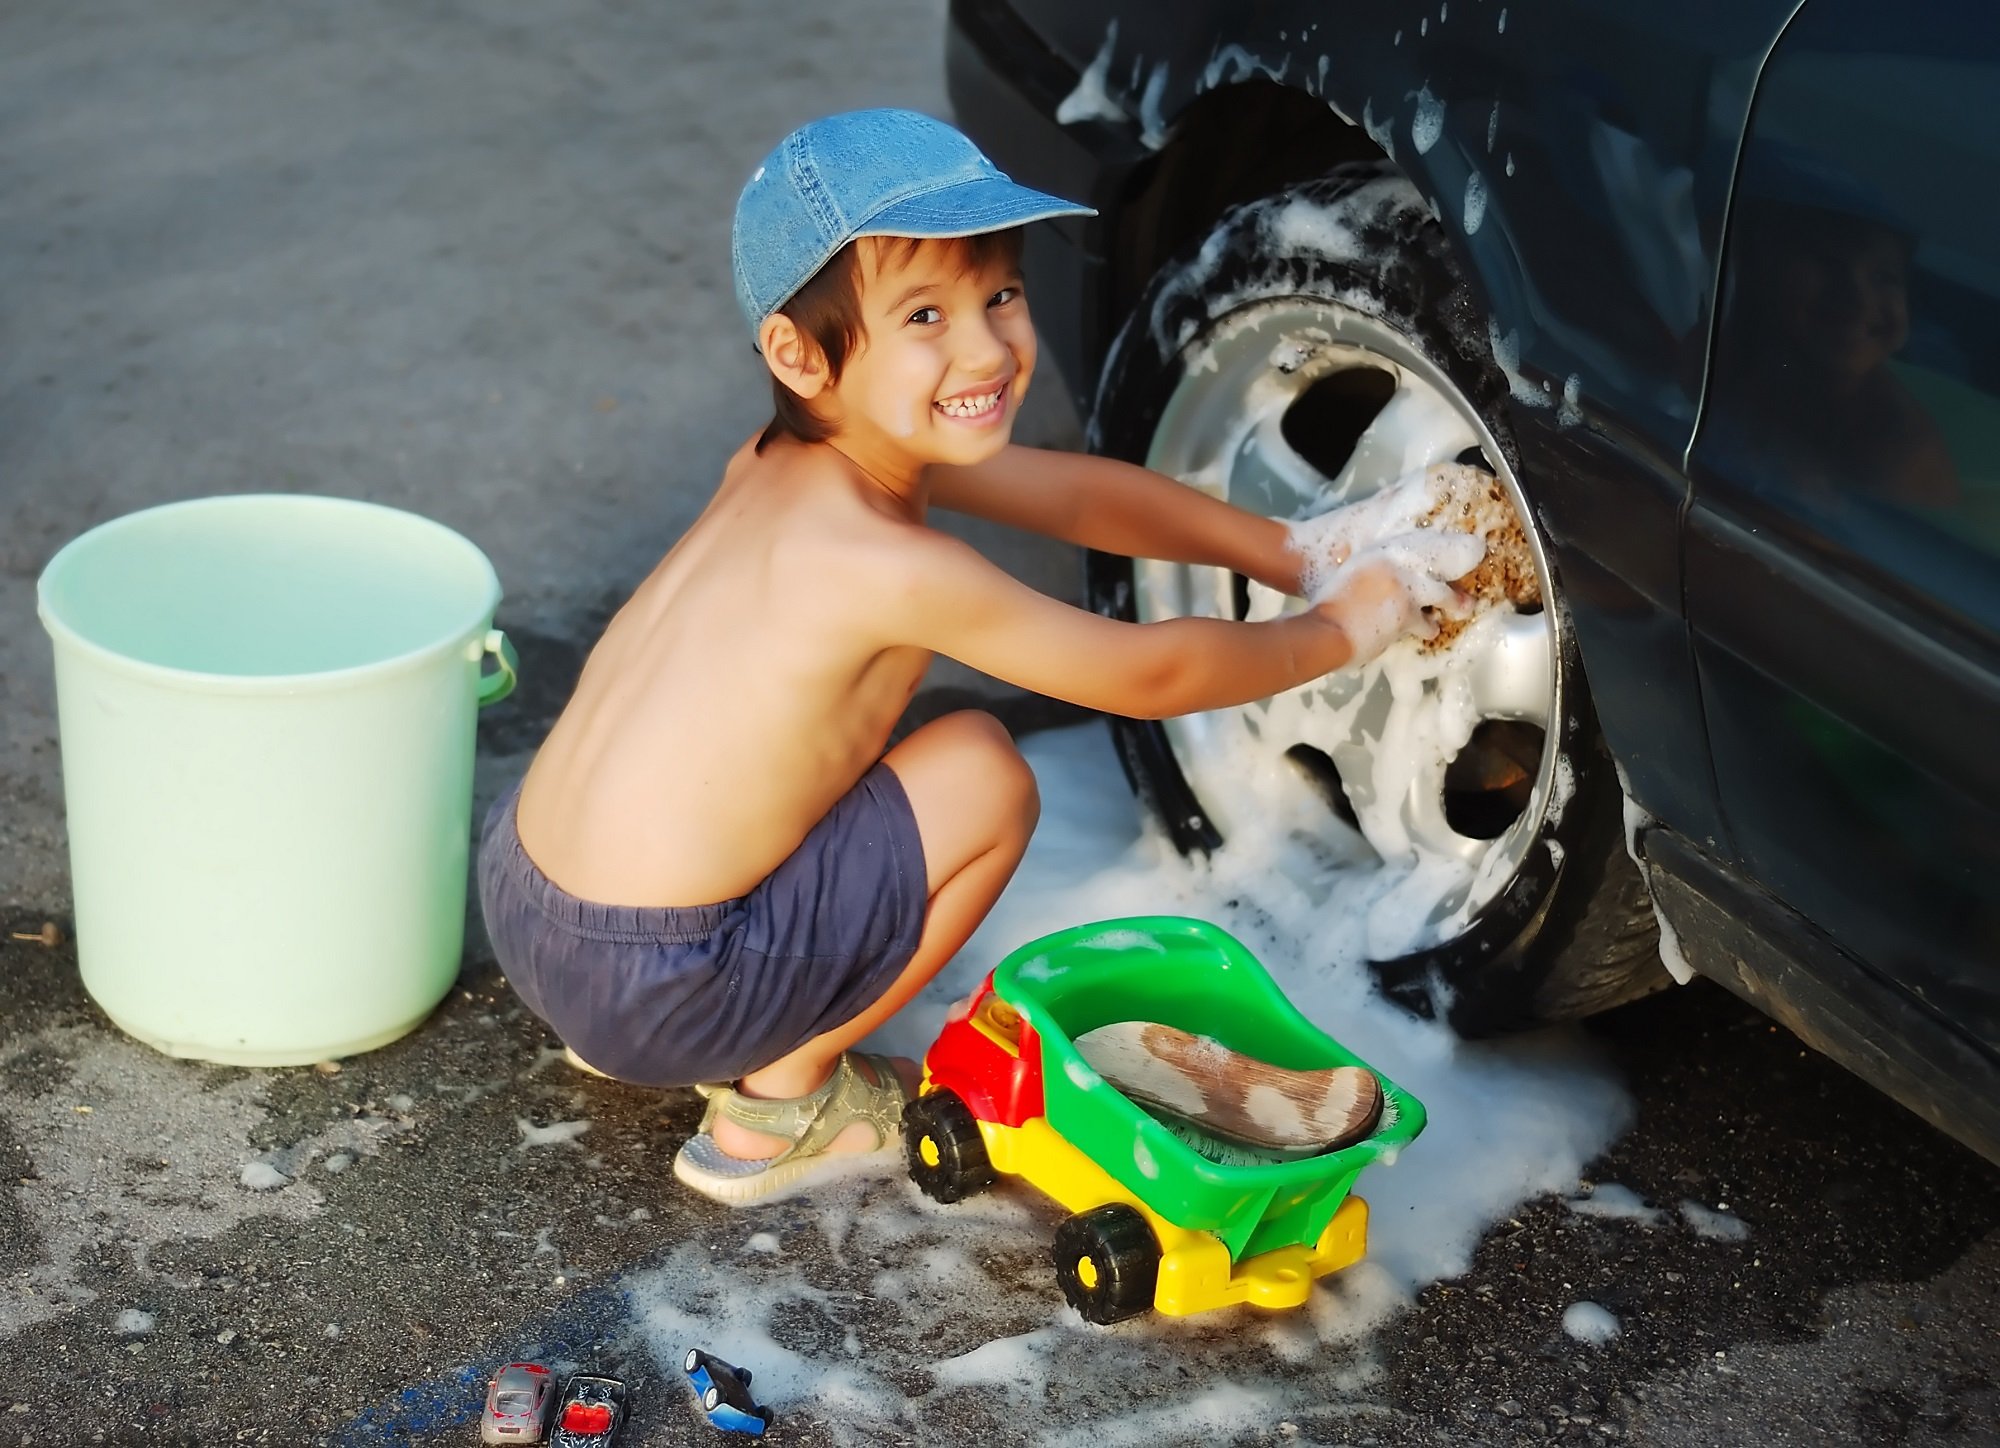 Jovencito ayuda a lavar el auto familiar. | Foto: Shutterstock